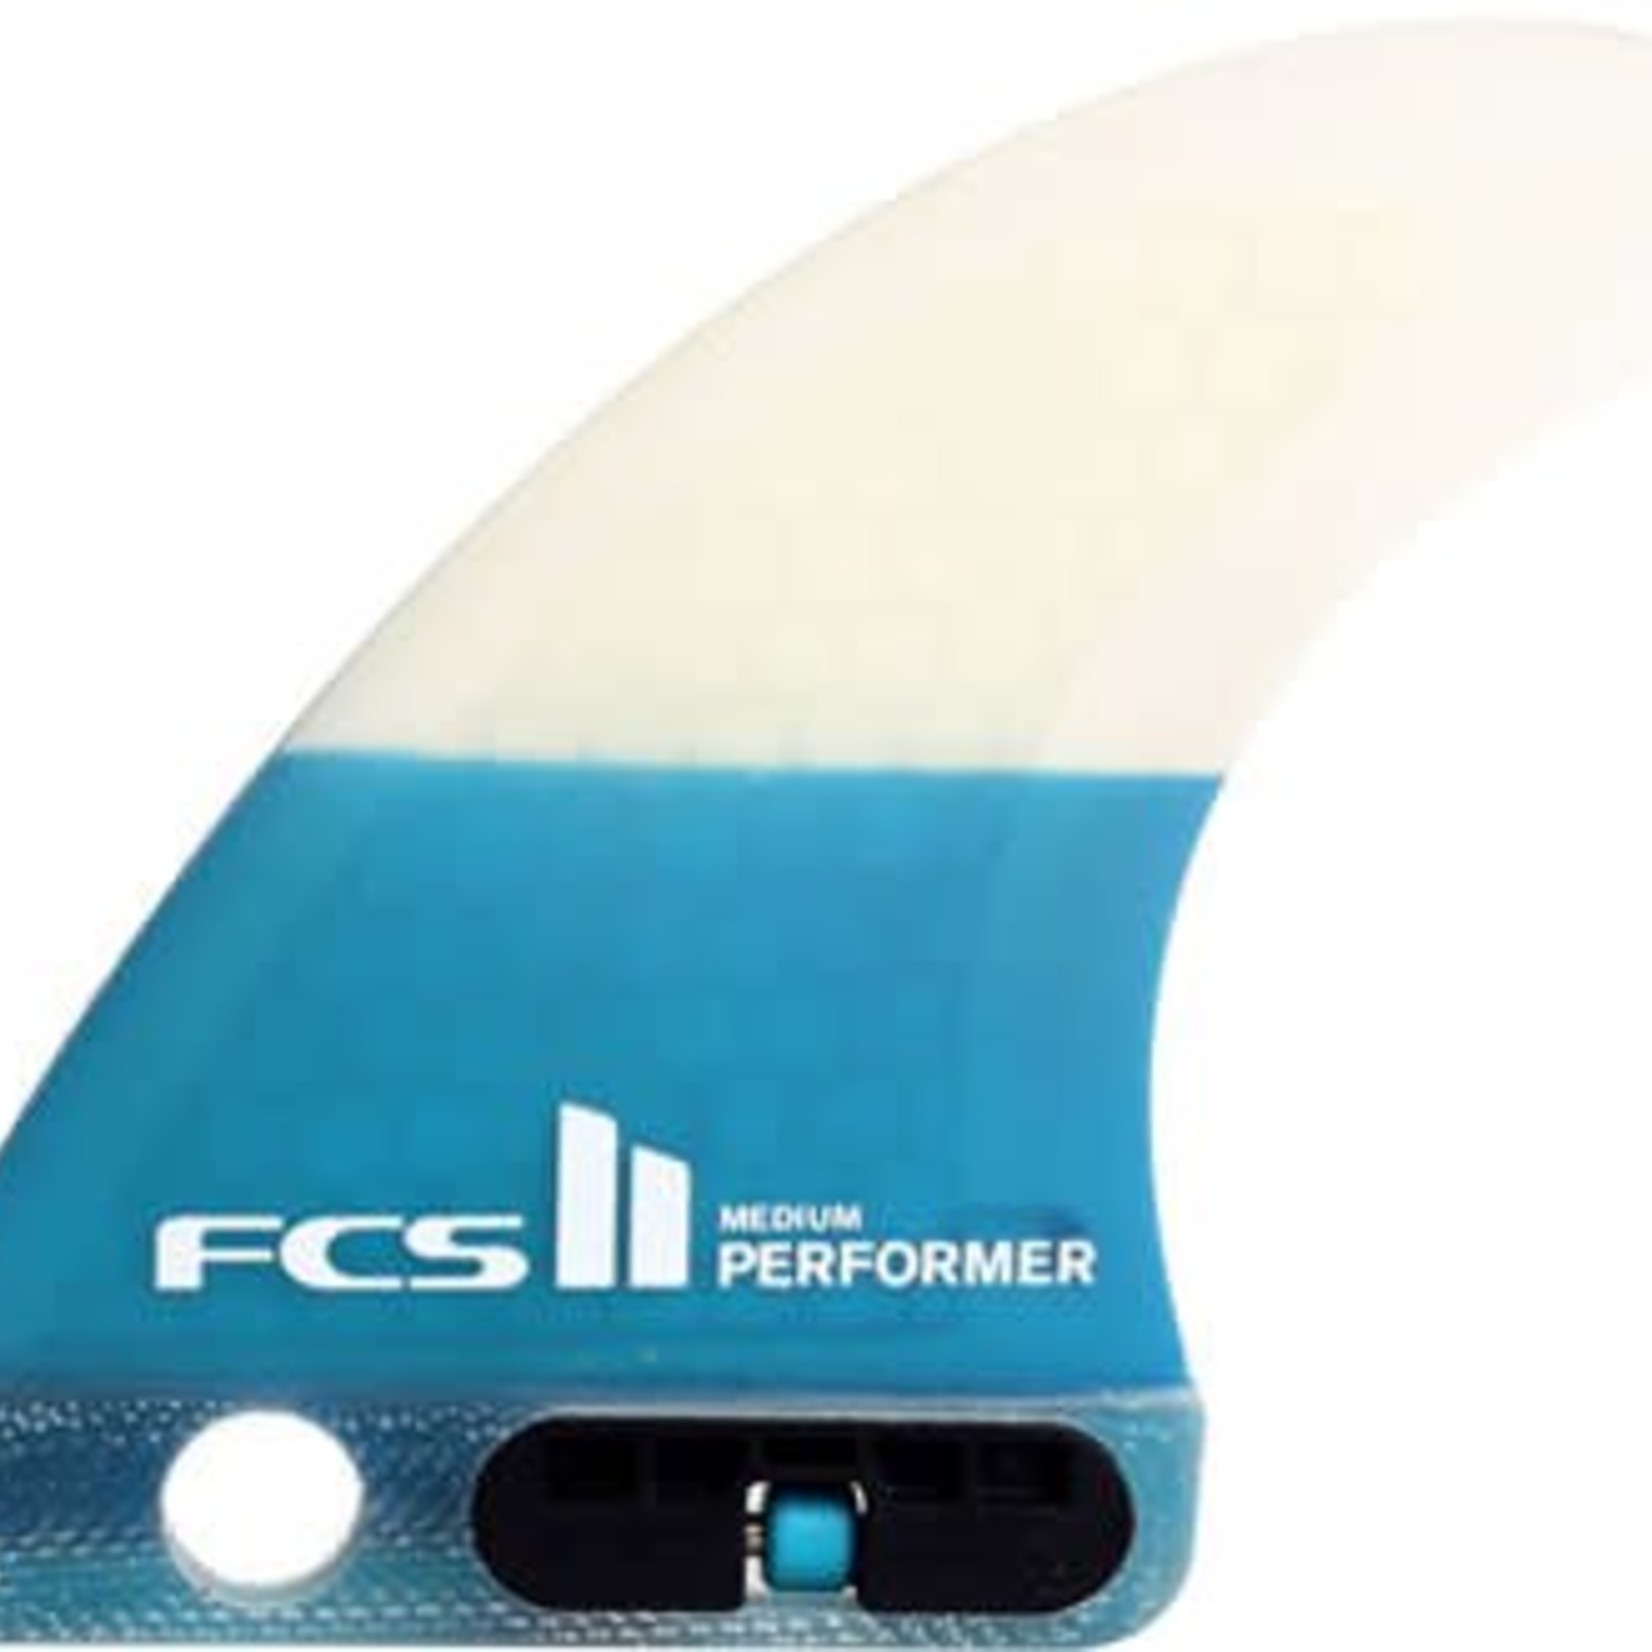 FCS FCS performer longboard fin